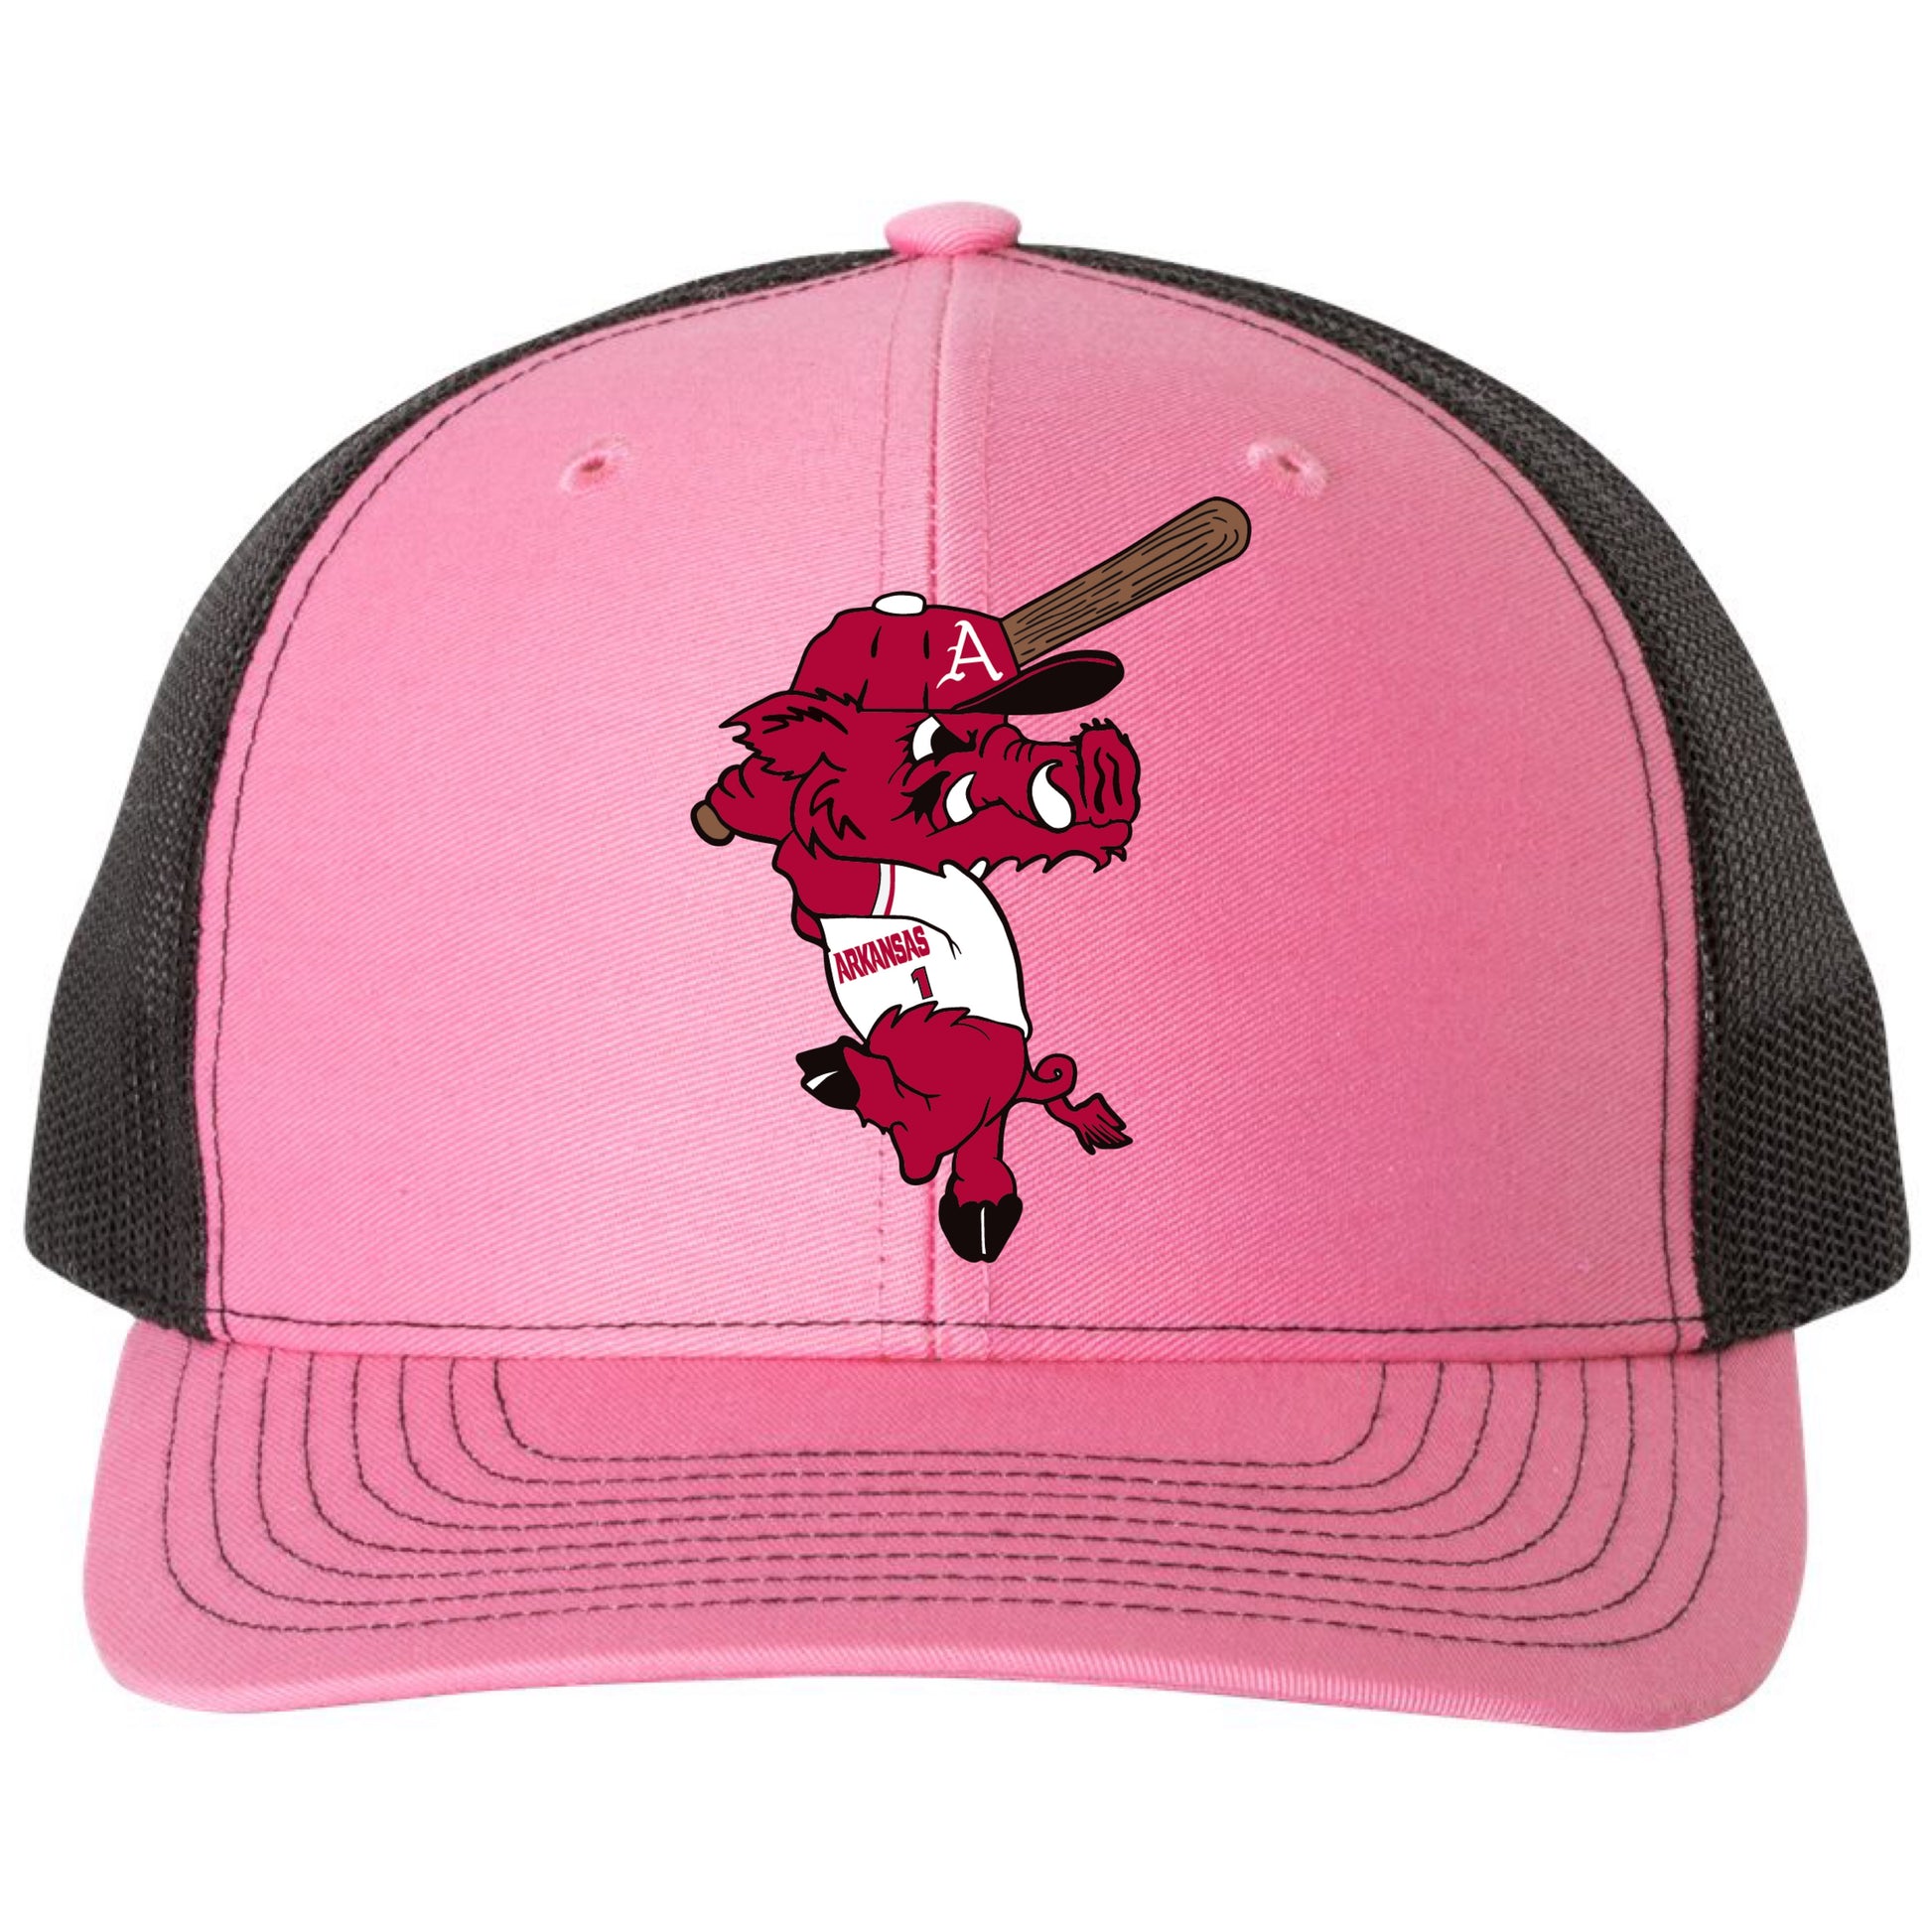 Ribby at Bat 3D Snapback Trucker Hat- Hot Pink/ Black - Ten Gallon Hat Co.